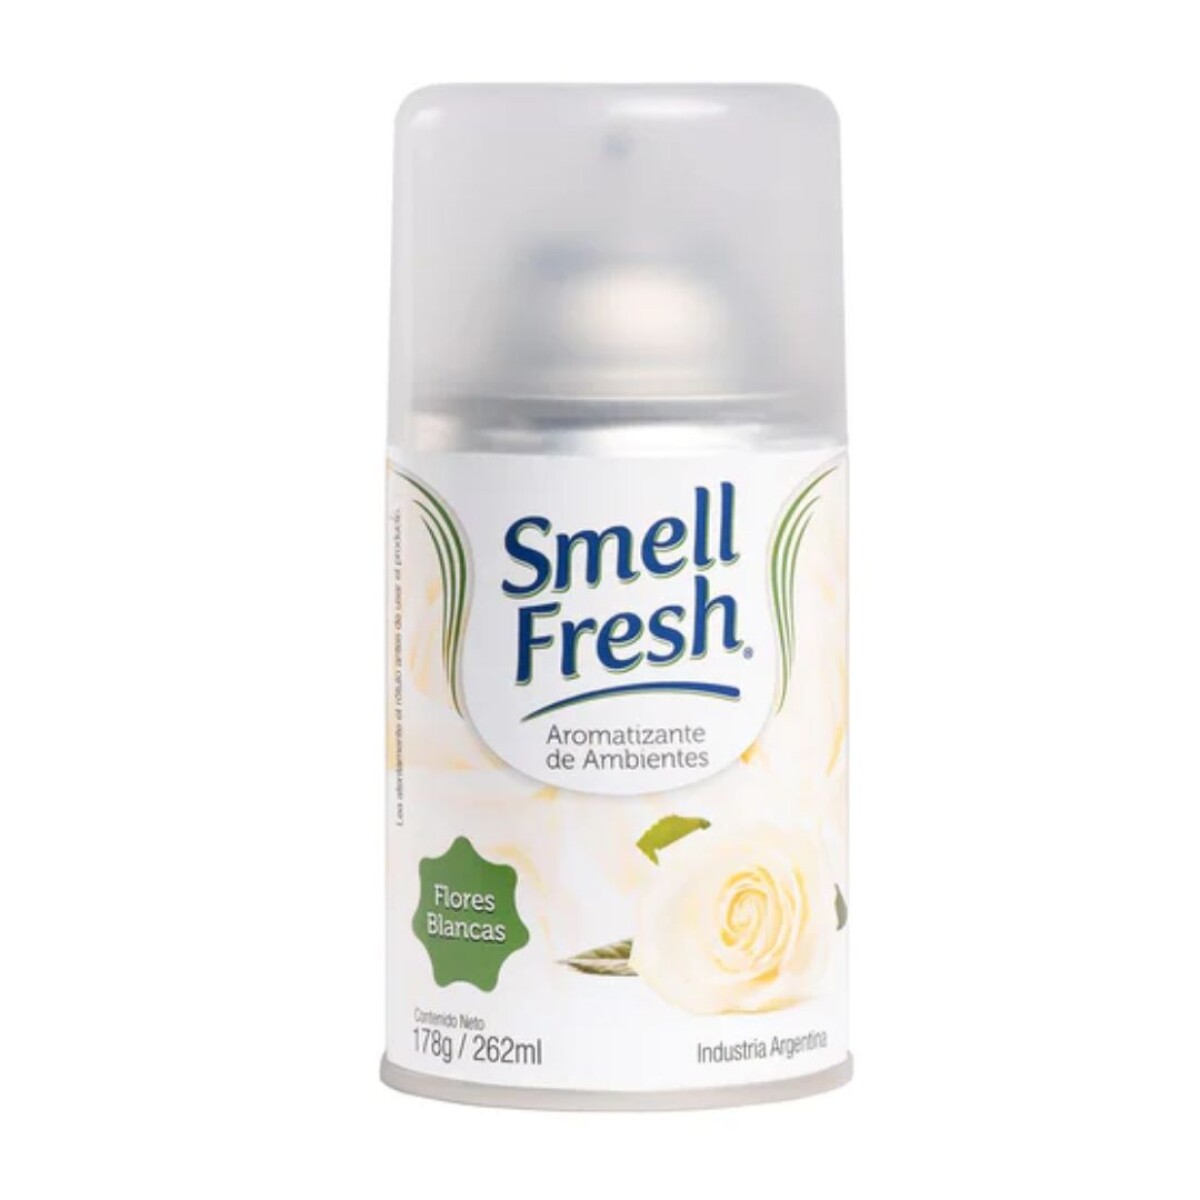 Aromatizante Smell Fresh - Flores Blancas 